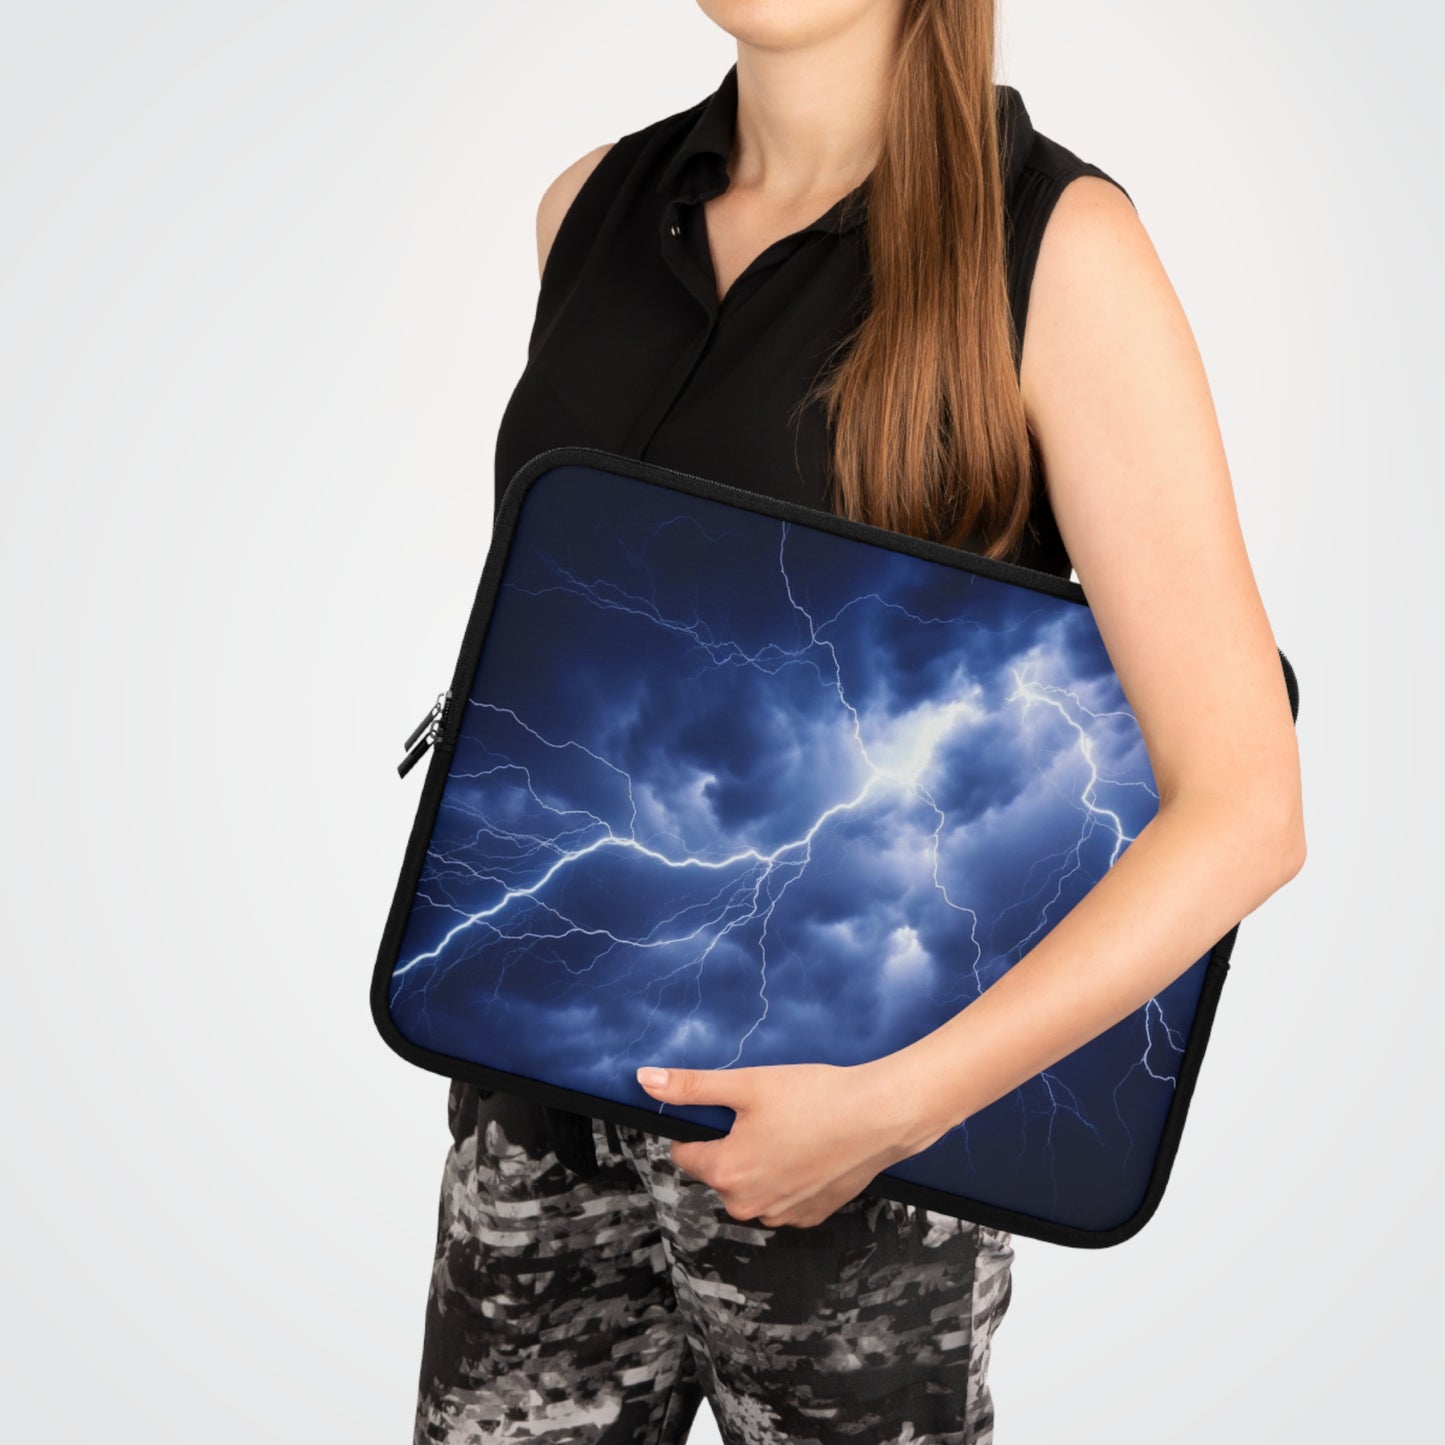 Blue Lightning Laptop Sleeve, Thunderstorm Tablet Sleeve, Stormy Skies iPad Cover, Elemental MacBook Sleeve, Electrifying Laptop Pouch